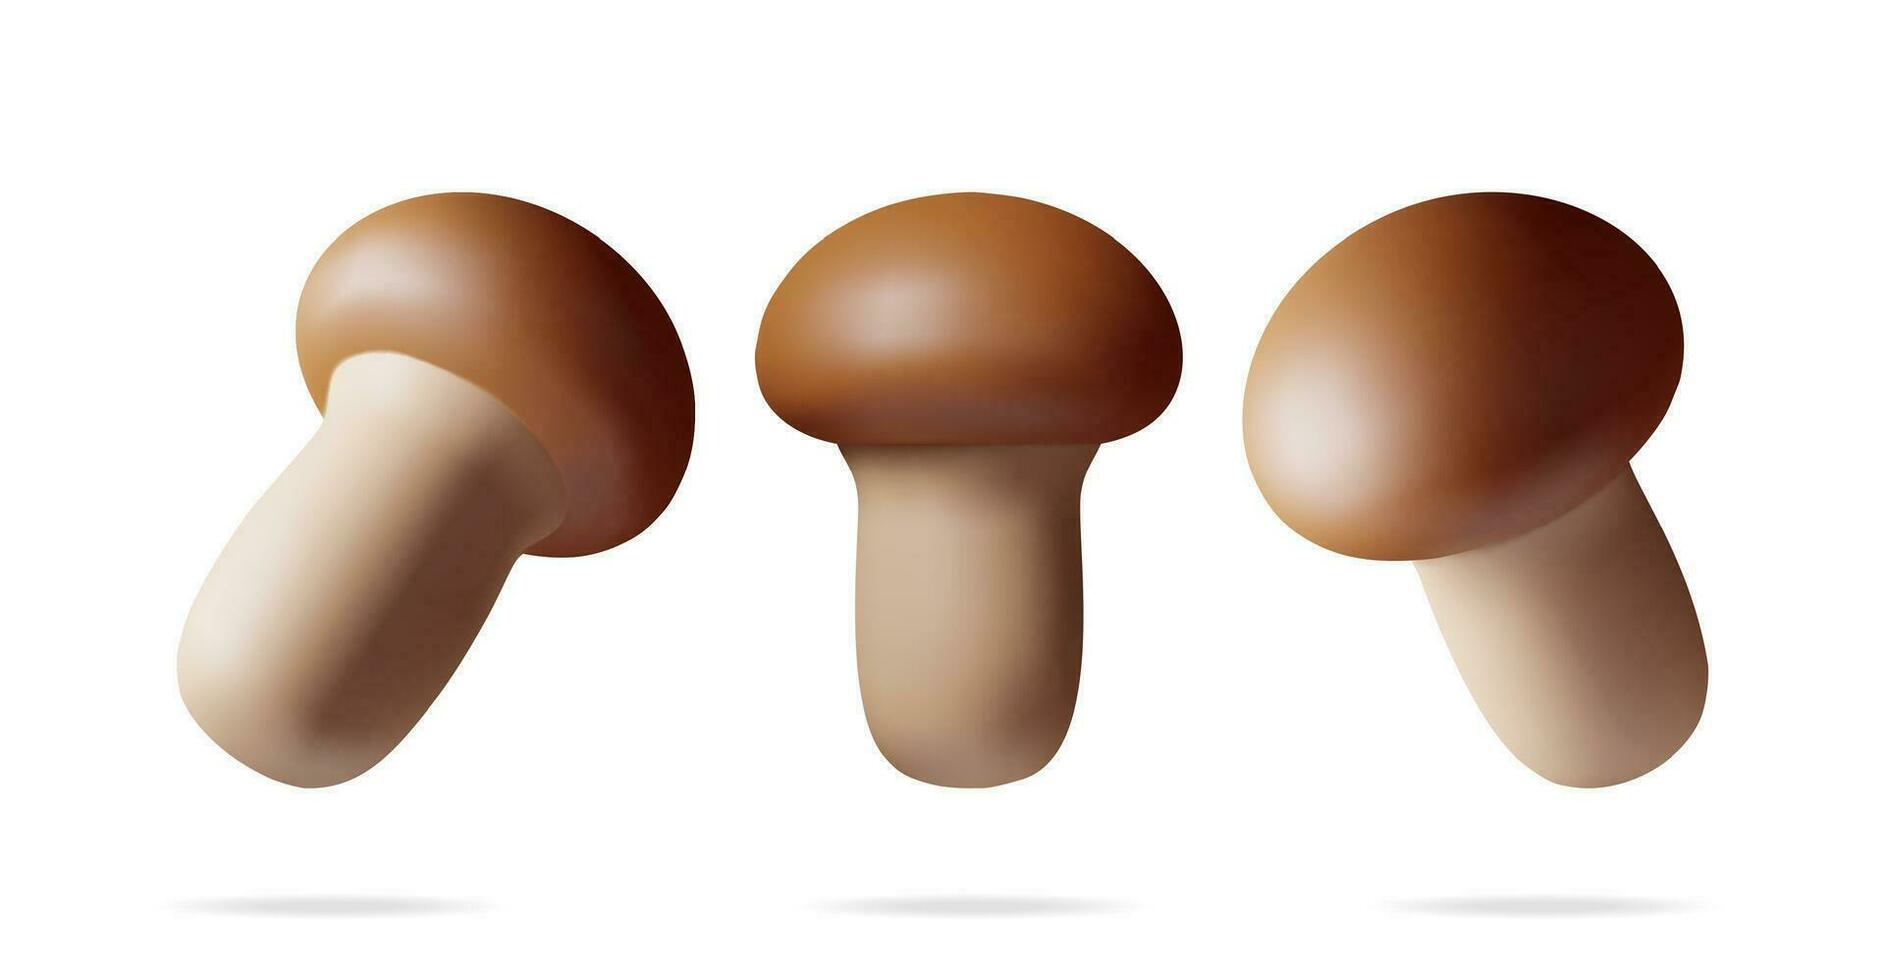 3d Ripe Mushroom Champignon in Different Angles Isolated on White. Render Cartoon Style Fungi Mushroom. Raw Food. Organic Healthy Food. Vegetarian Nutrition. Vector Illustration